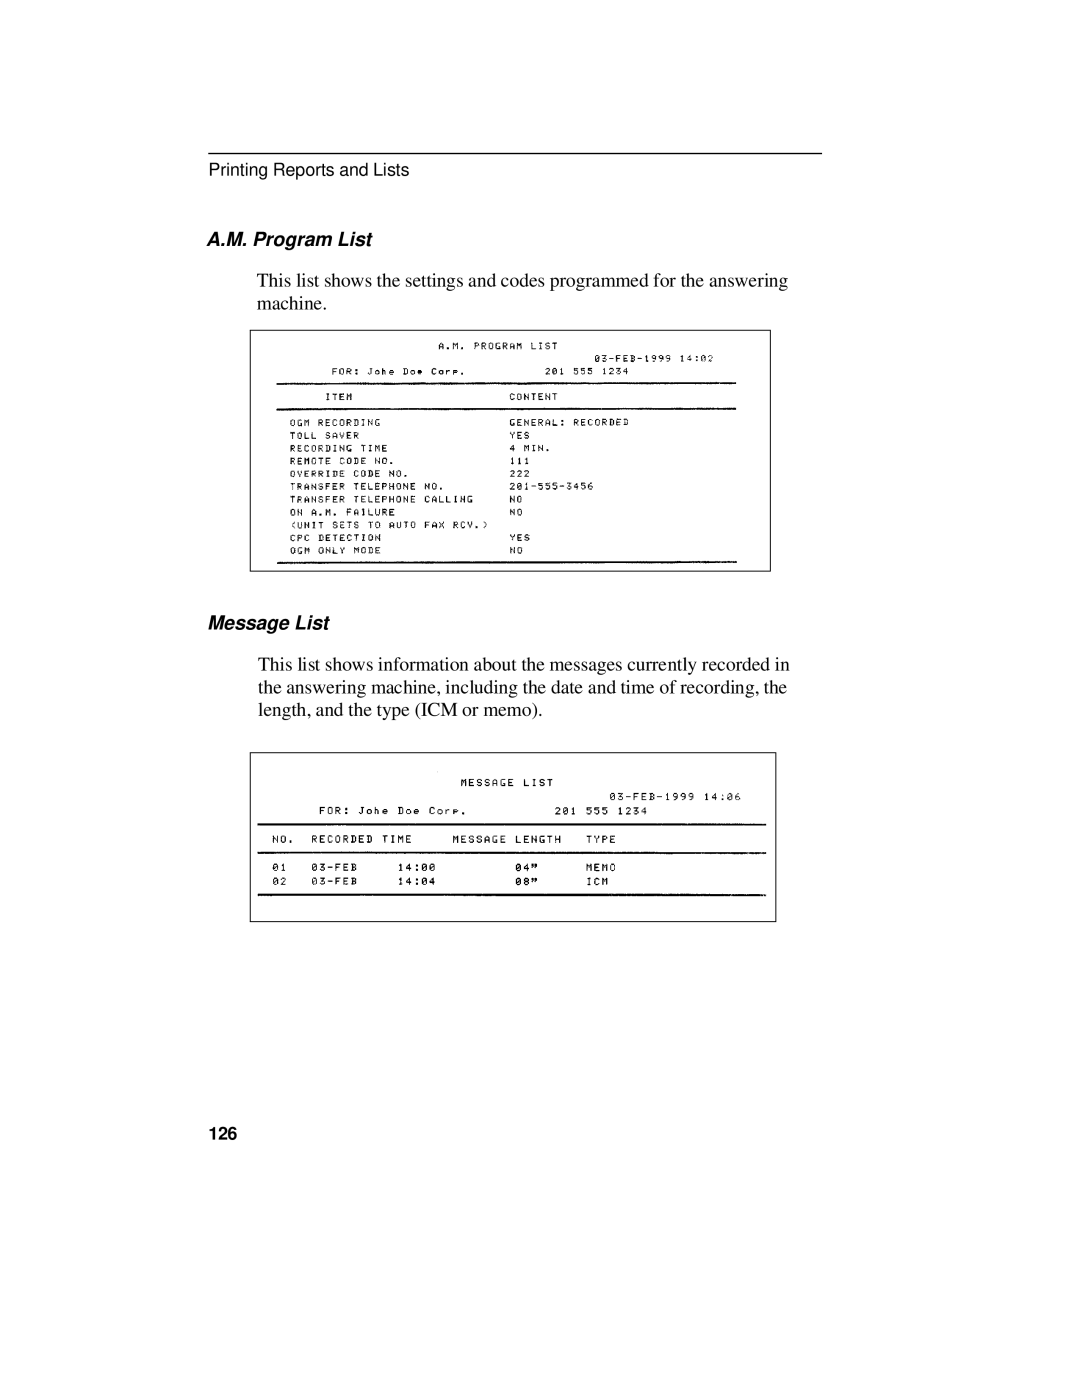 Sharp UX-470 operation manual Program List, Message List, 126 